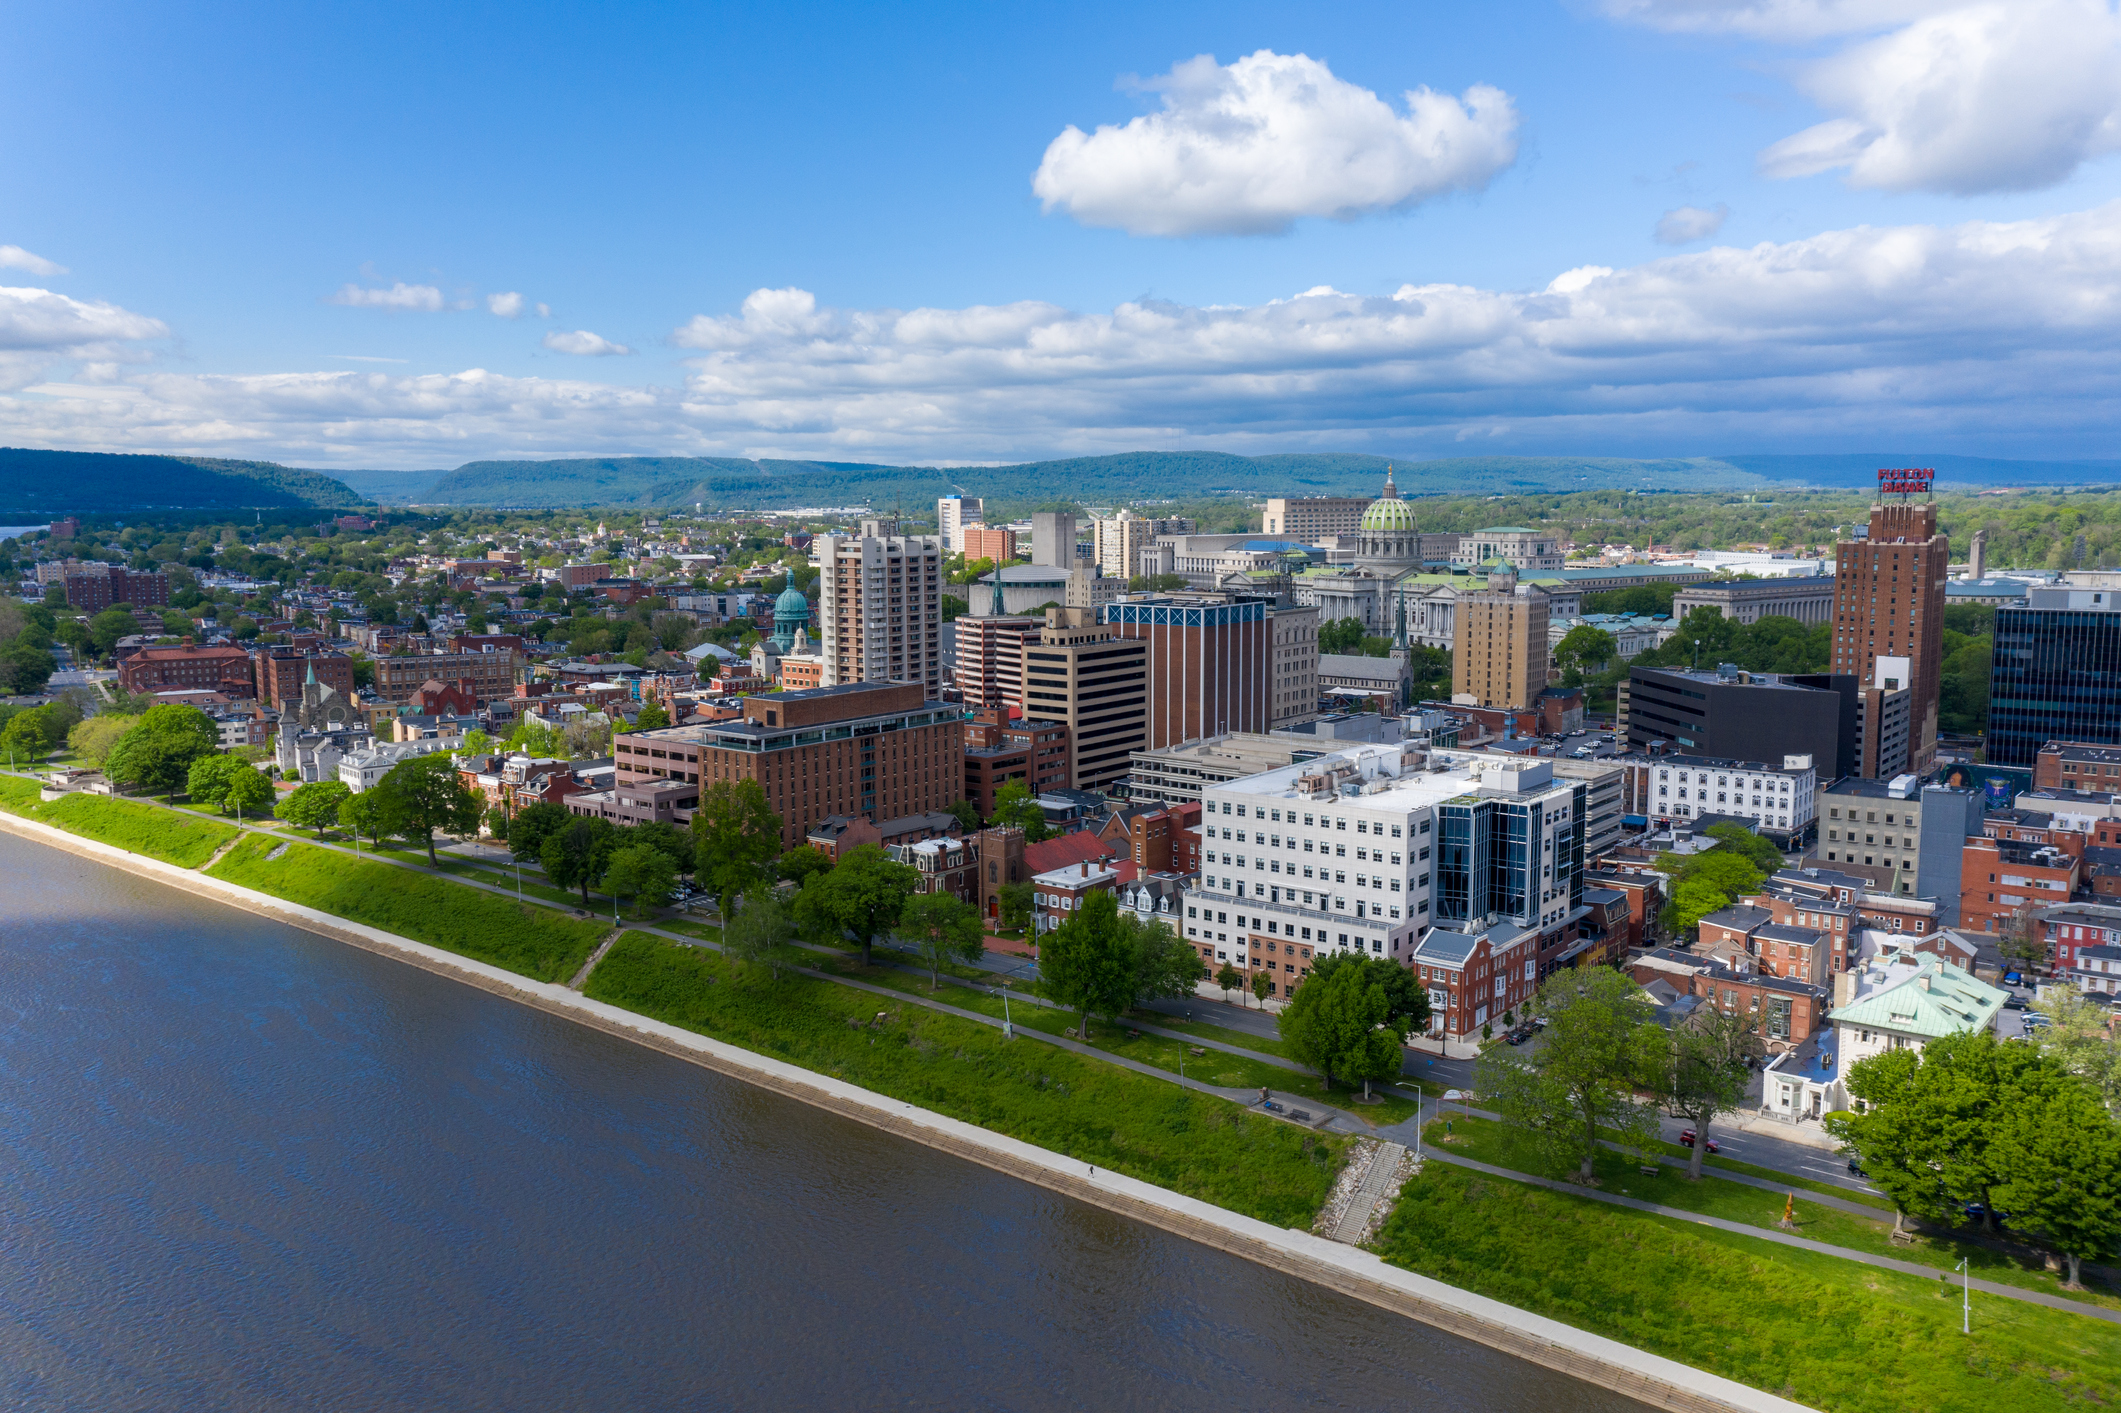 Aerial view of downtown Harrisburg, Pennsylvania